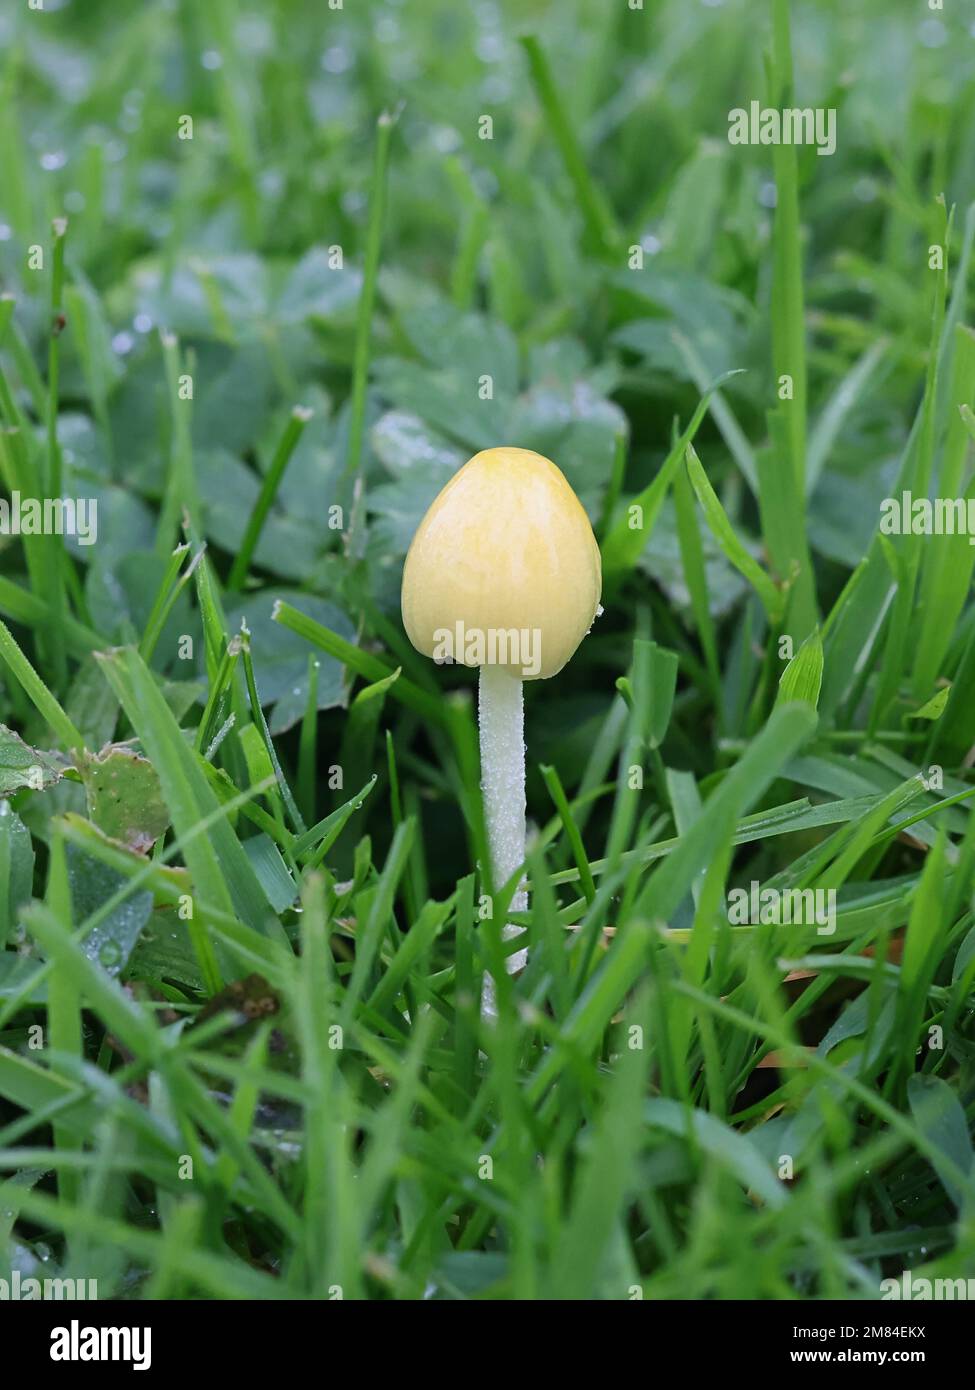 Bolbitius titubans, also known as Bolbitius vitellinus, commonly called Yellow Fieldcap or Egg-yolk Fieldcap, wild mushroom from Finland Stock Photo